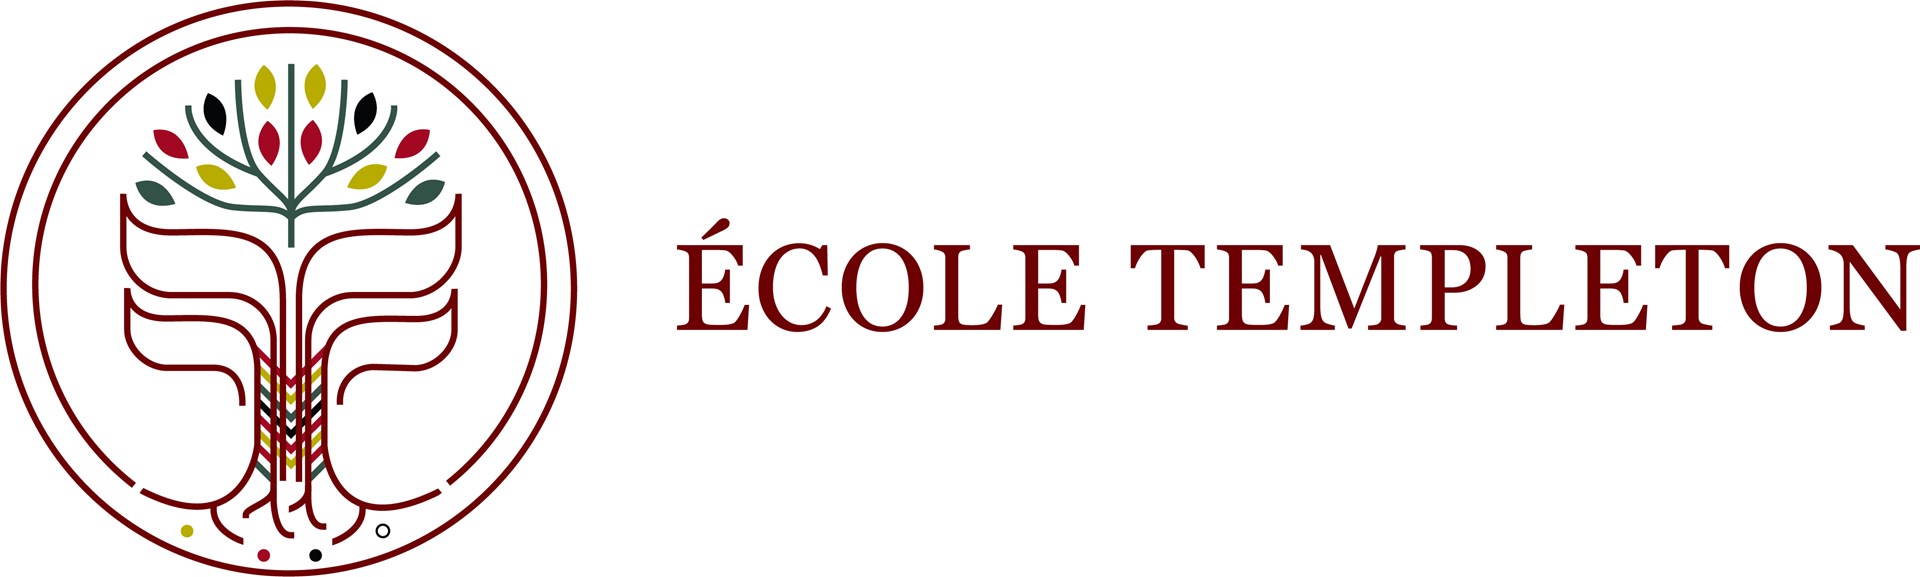 11524 SOSD Ecole Templeton Logo Horizontal RGB.jpg